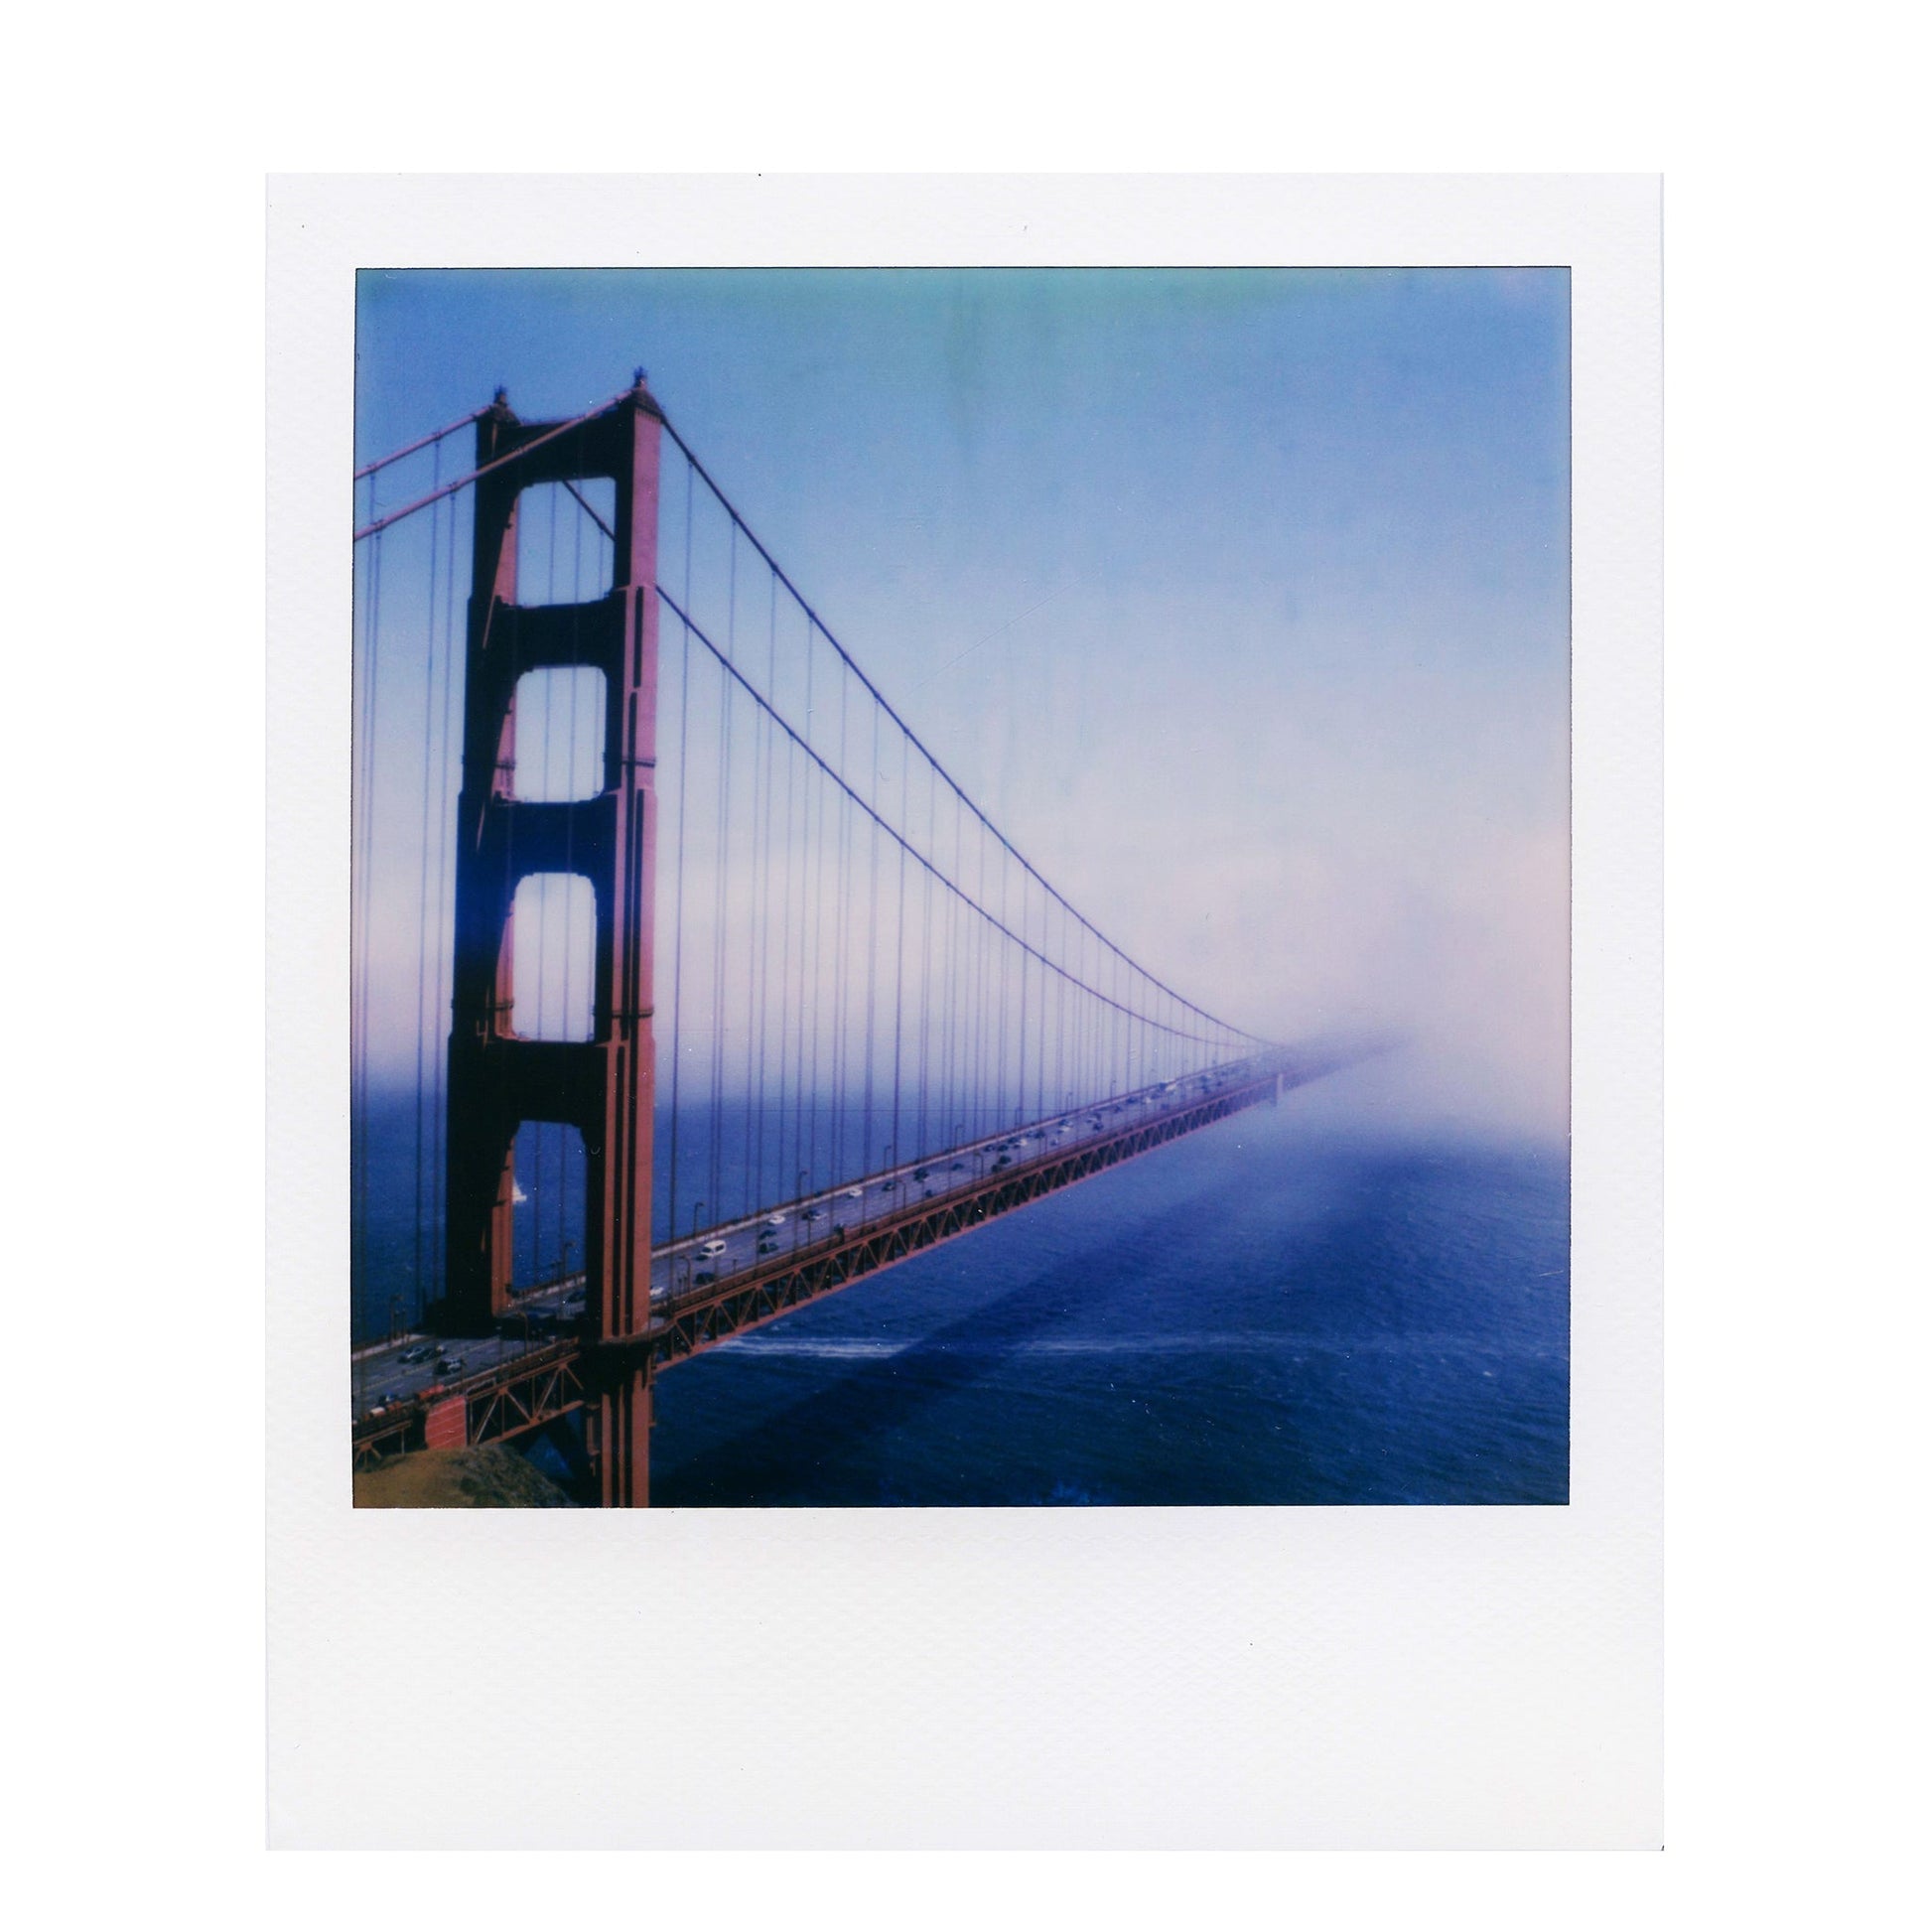 Polaroid Color i-Type Film 白框 (6000) ｜ 即影即有菲林相機 - LINKO Shop